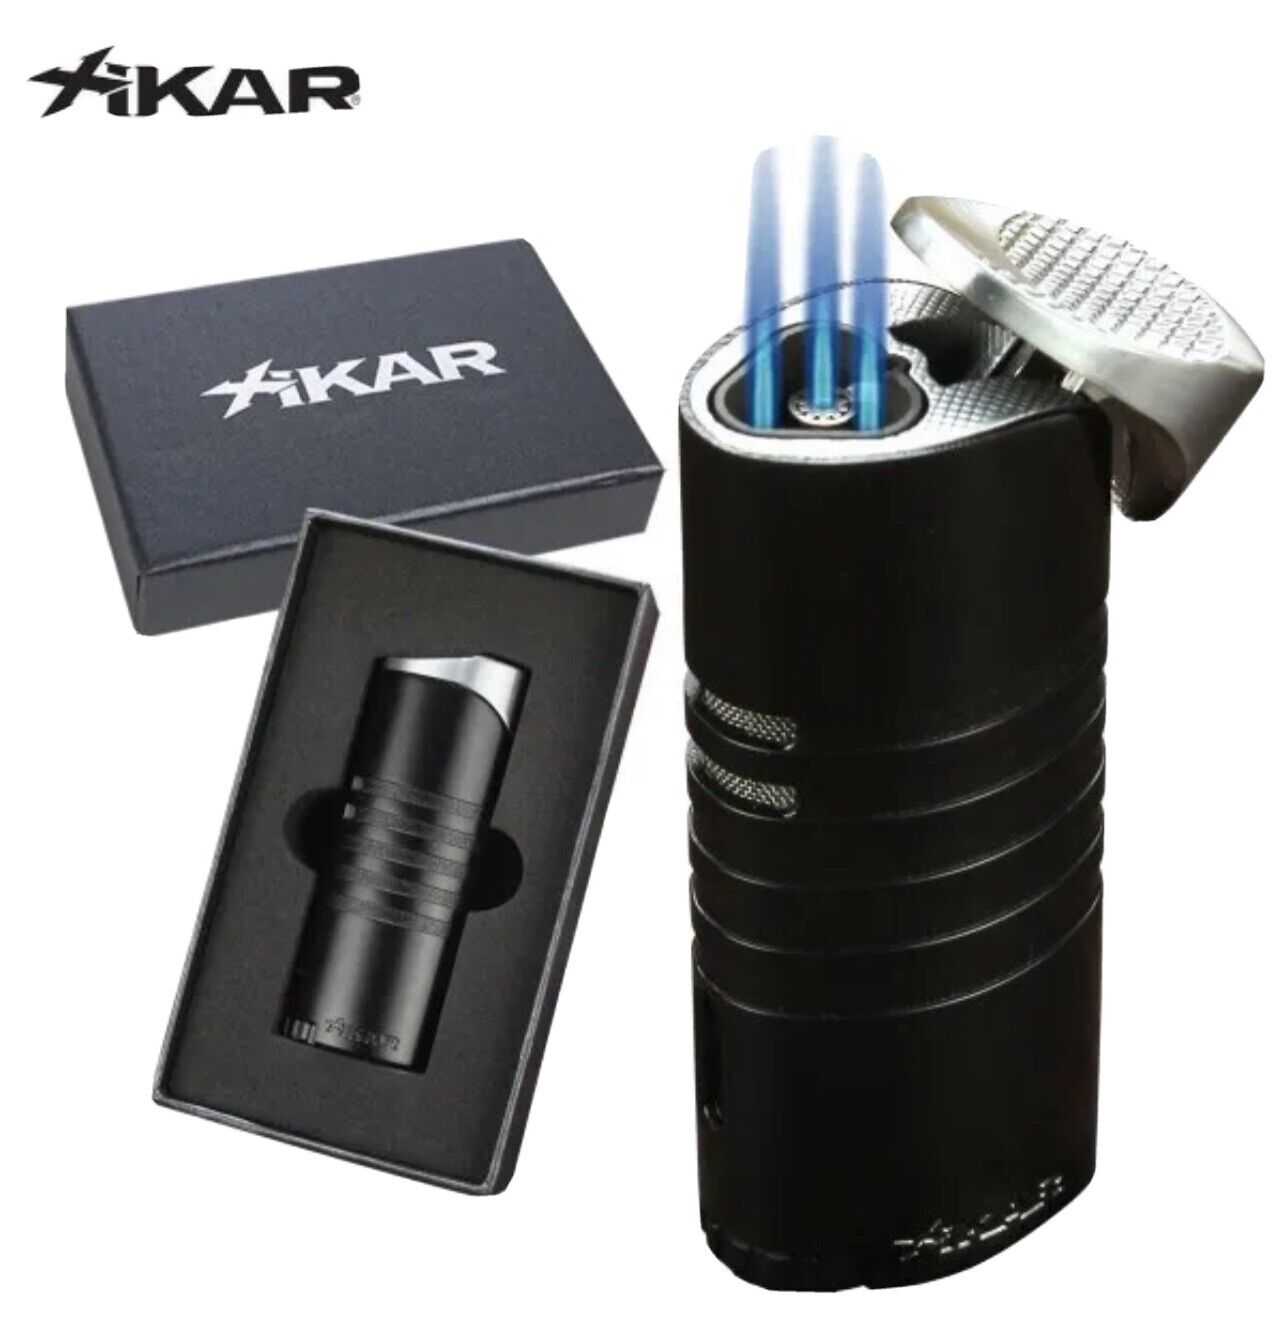 NEW XiKAR ELLIPSE Triple Jet Flame Cigar Lighter - Black and Chrome